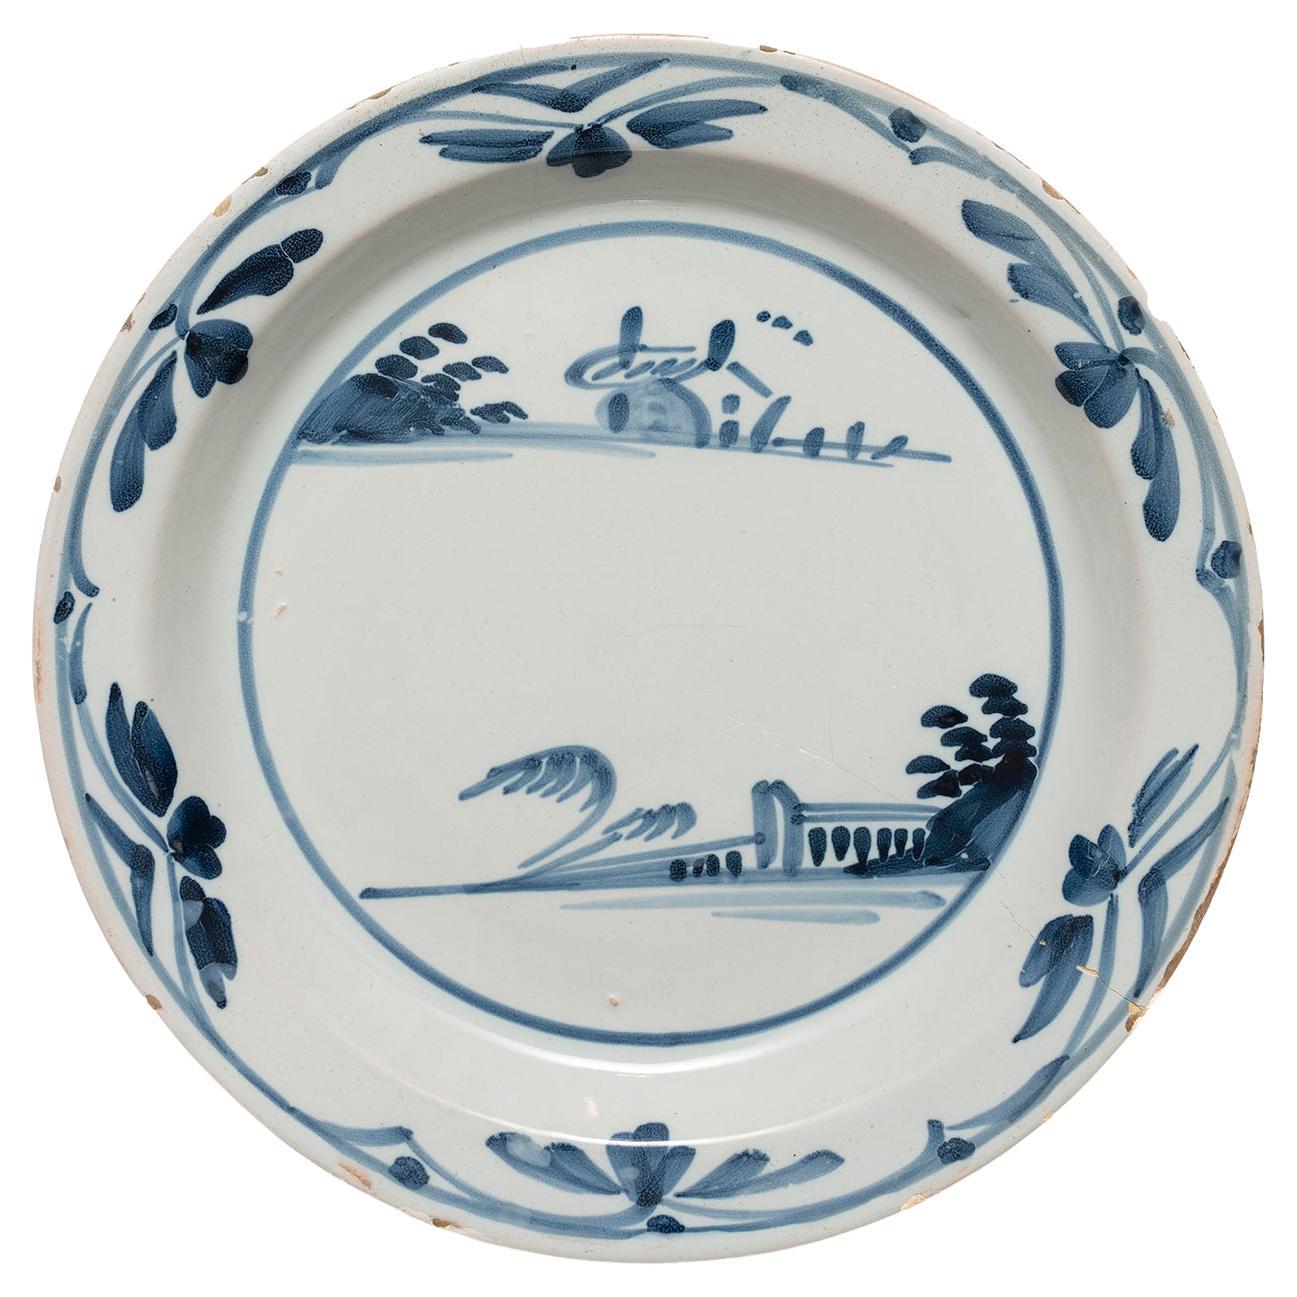 Plate delft London Chinoiserie landscape blue white pottery diameter 22.5cm 9" For Sale